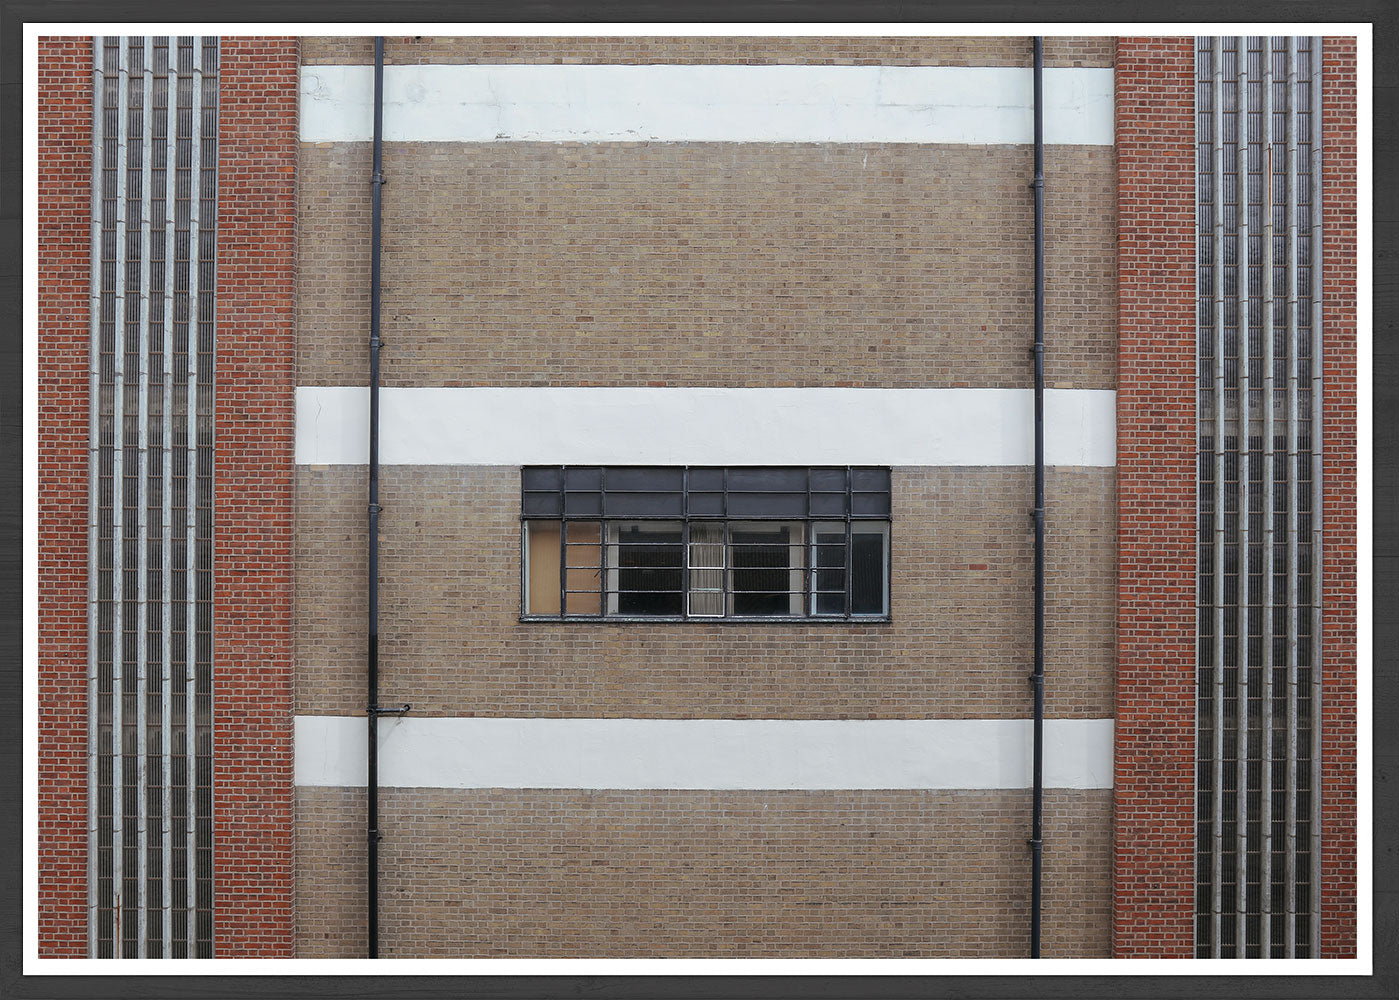 Industrial Fraser Window Building Photo Print Framed